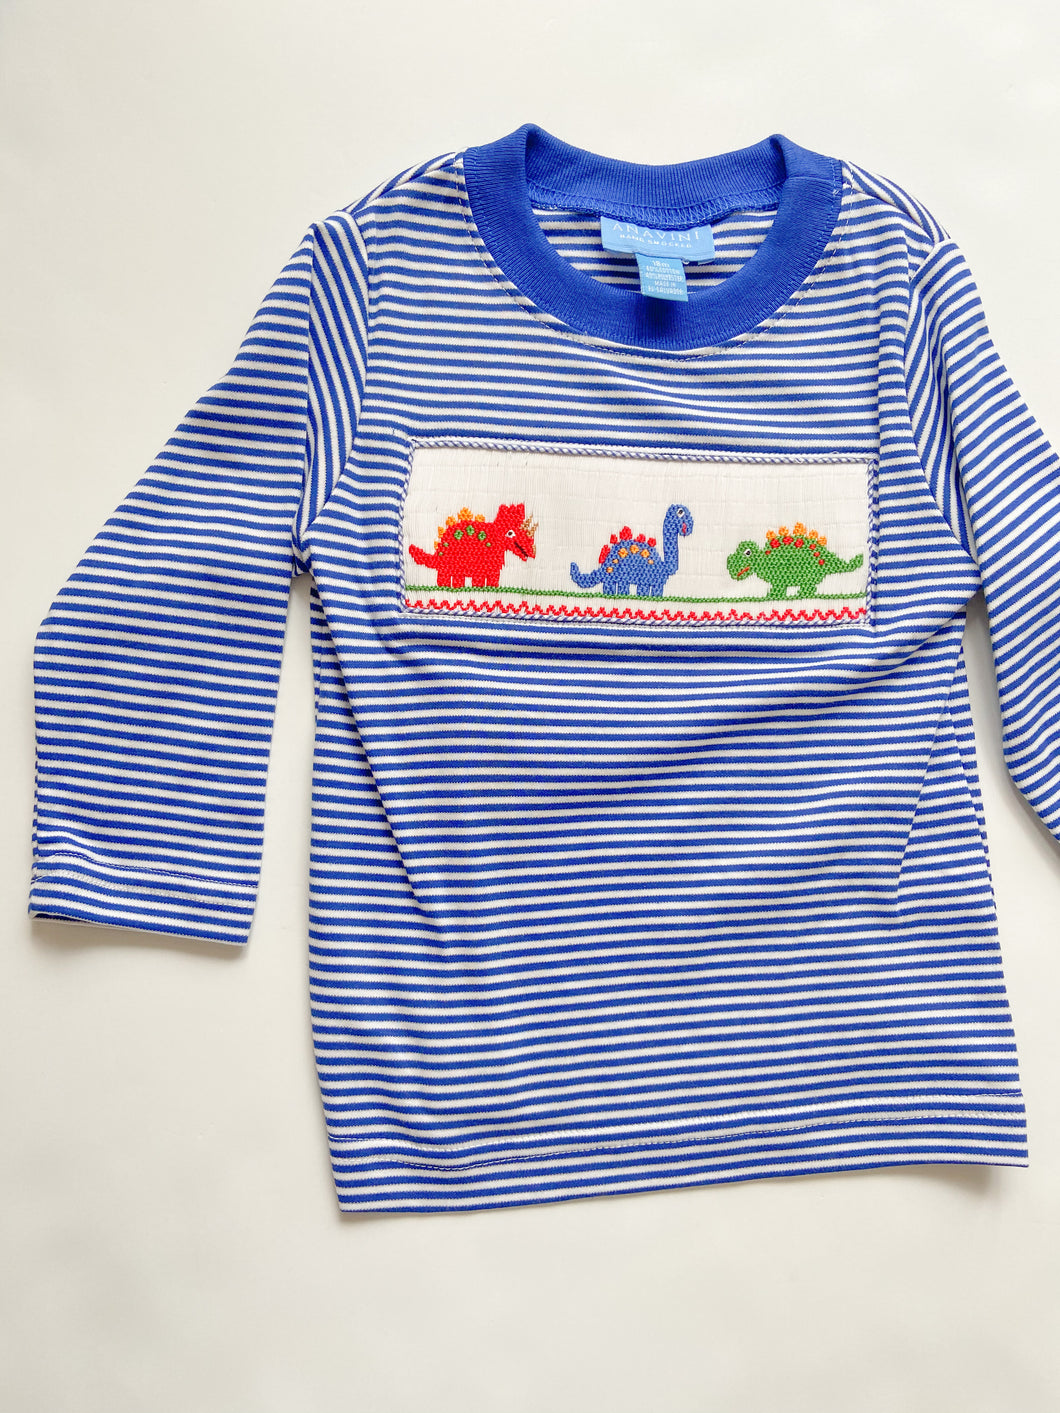 Dinosaur Smocked T-Shirt - Toddler Boys